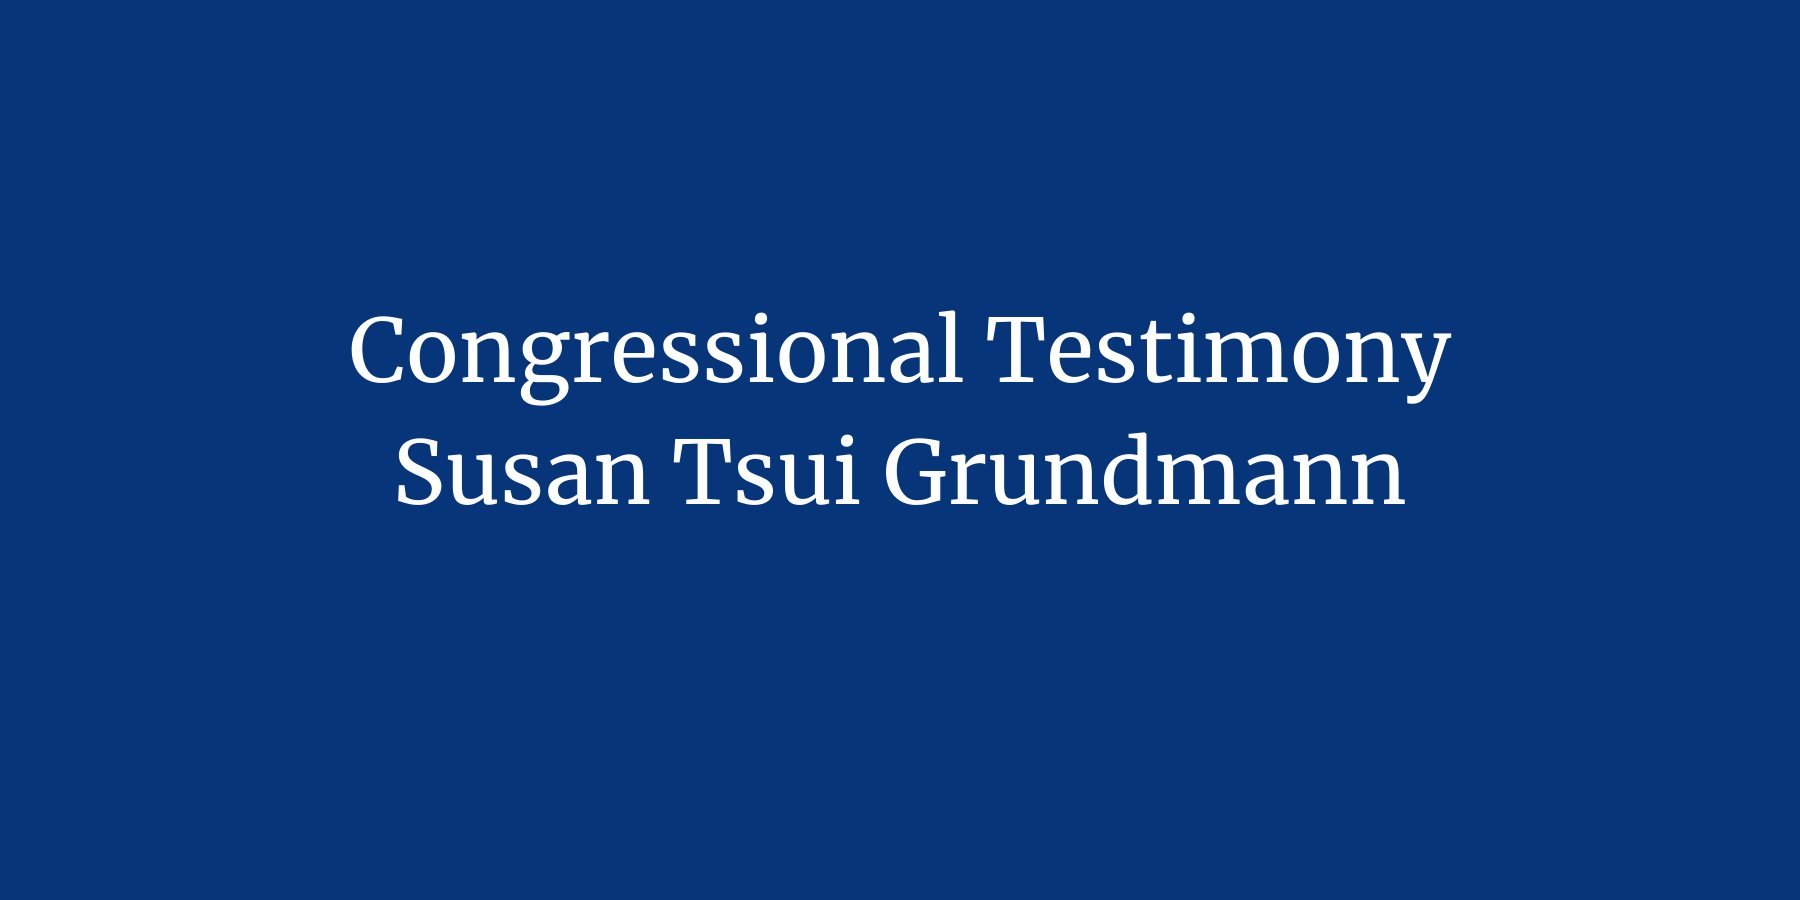 Congressional testimony, Susan Tusi Grundmann